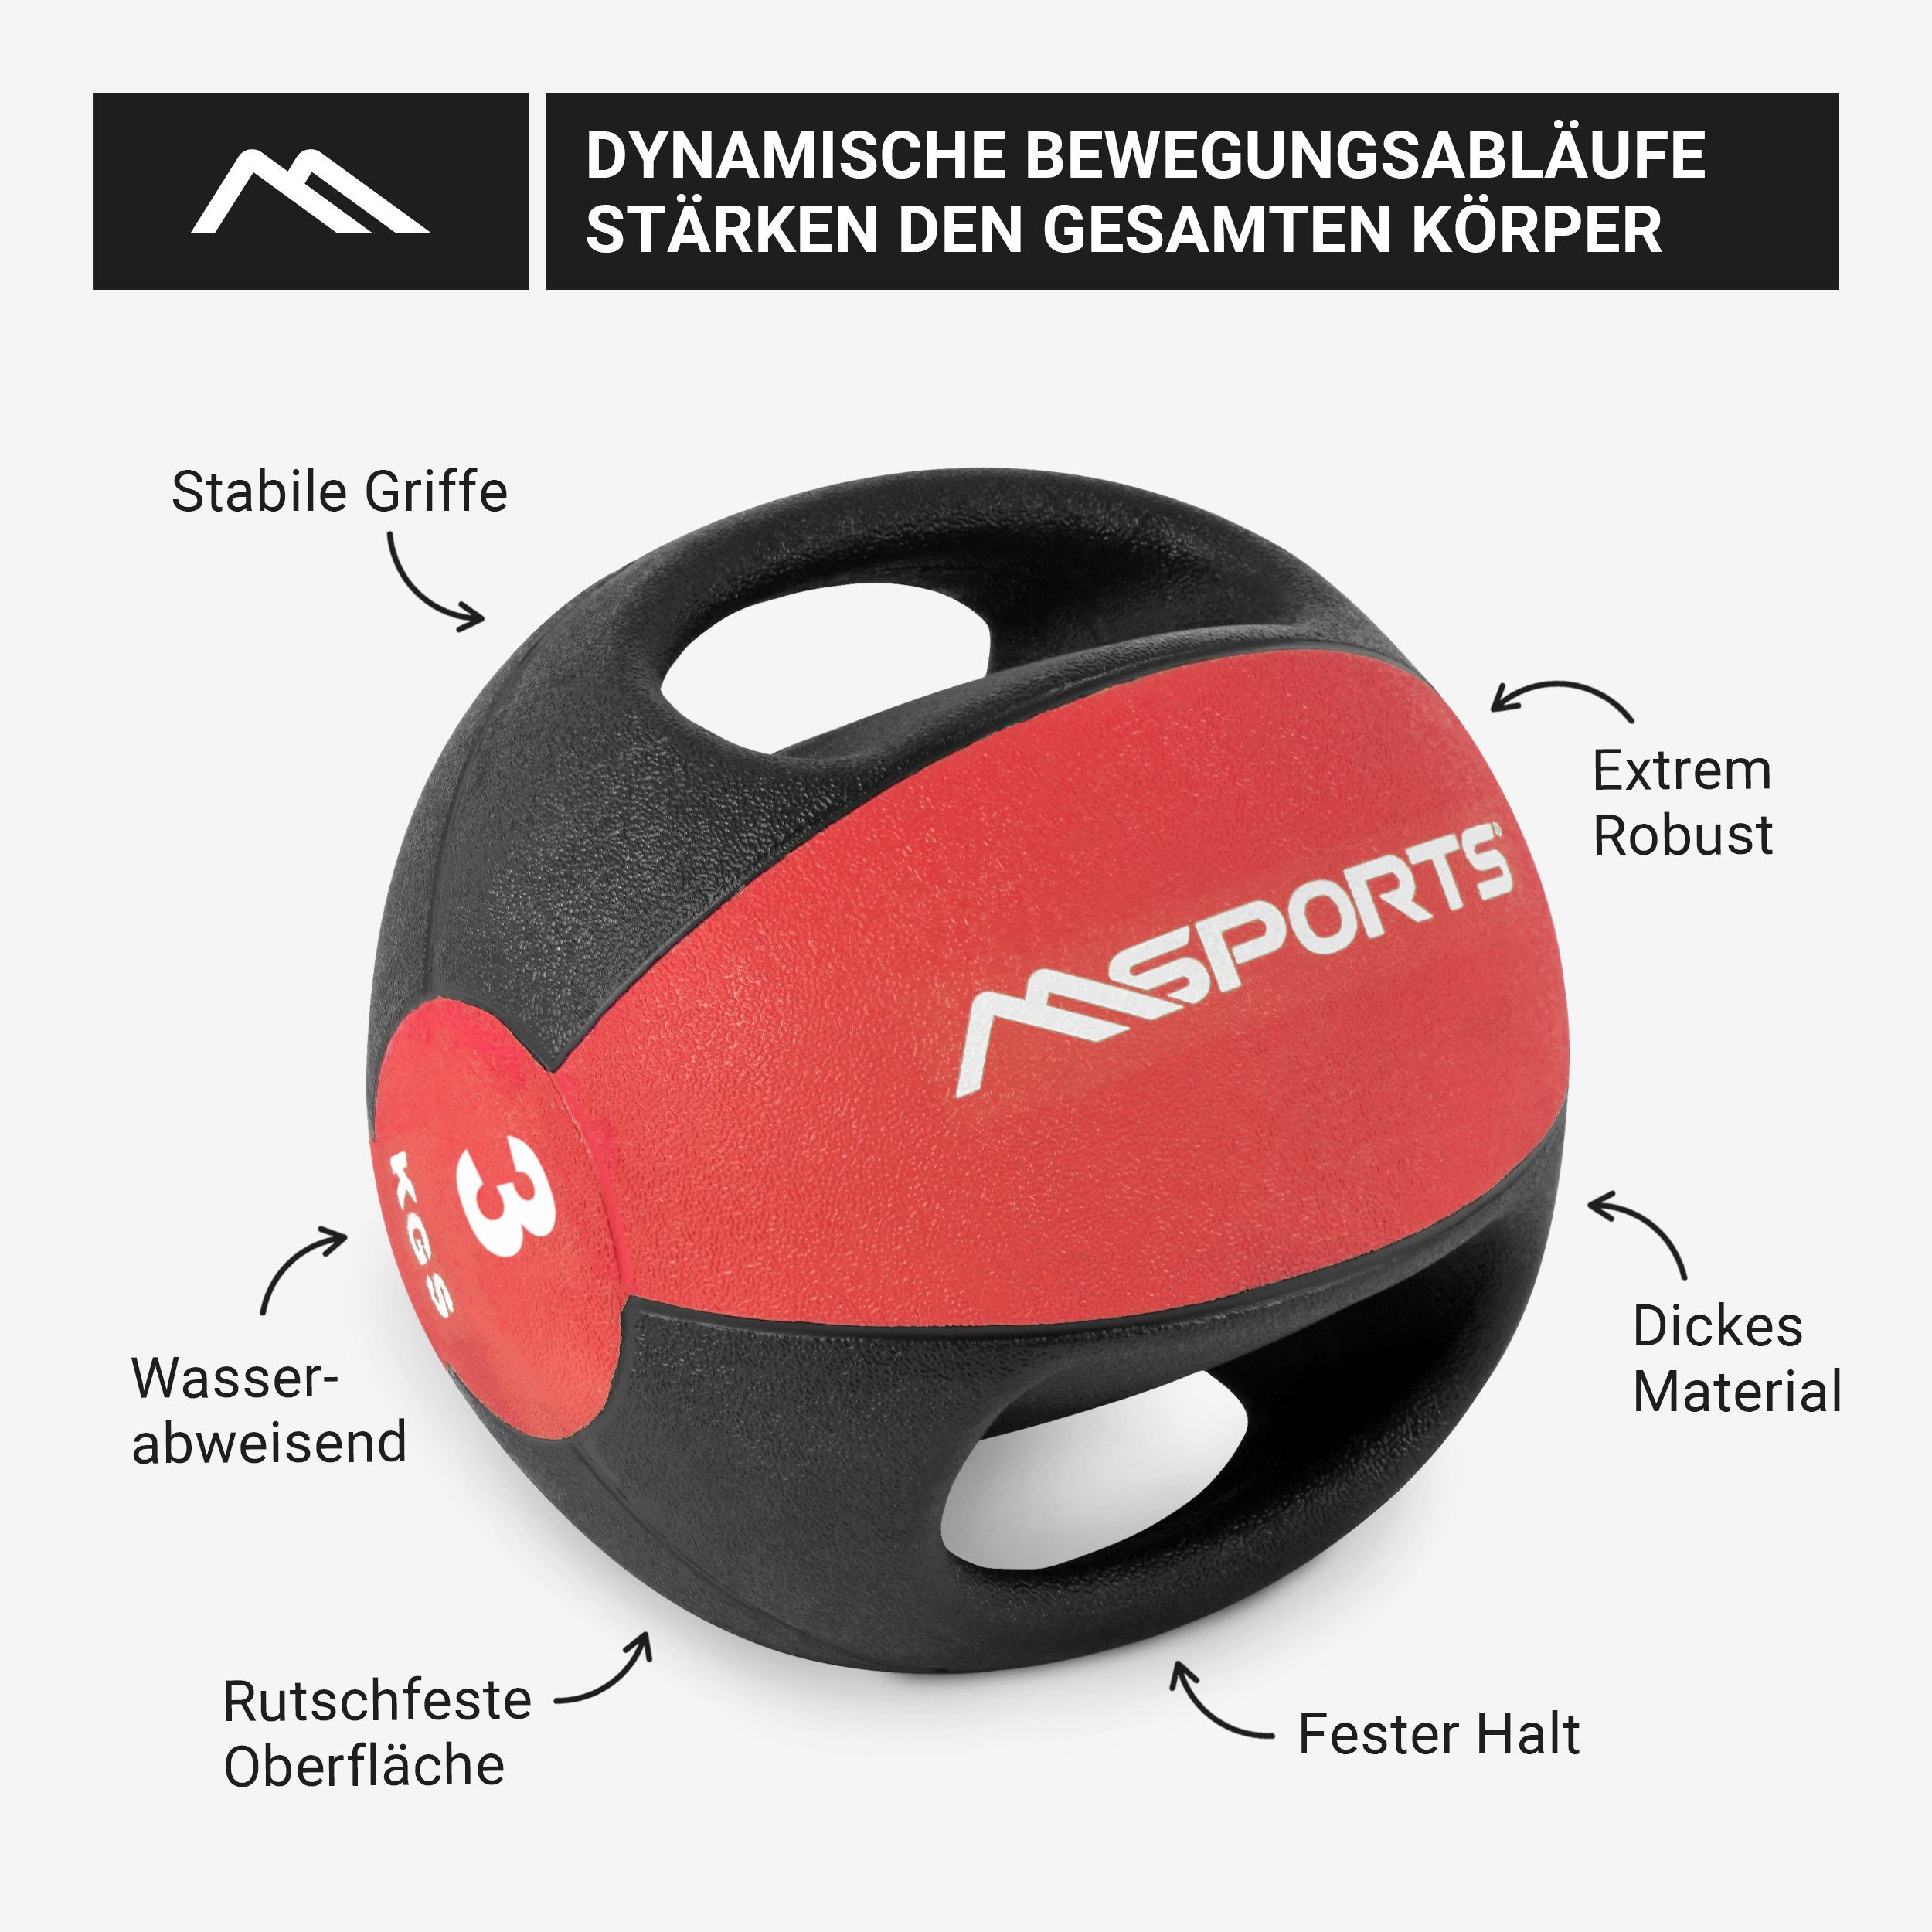 Gymnastikbälle Premium mit kg 1 Professionelle Rot Studio-Qualität 10 - Medizinball kg – MSports® 3 – Griffe Medizinball MSPORTS